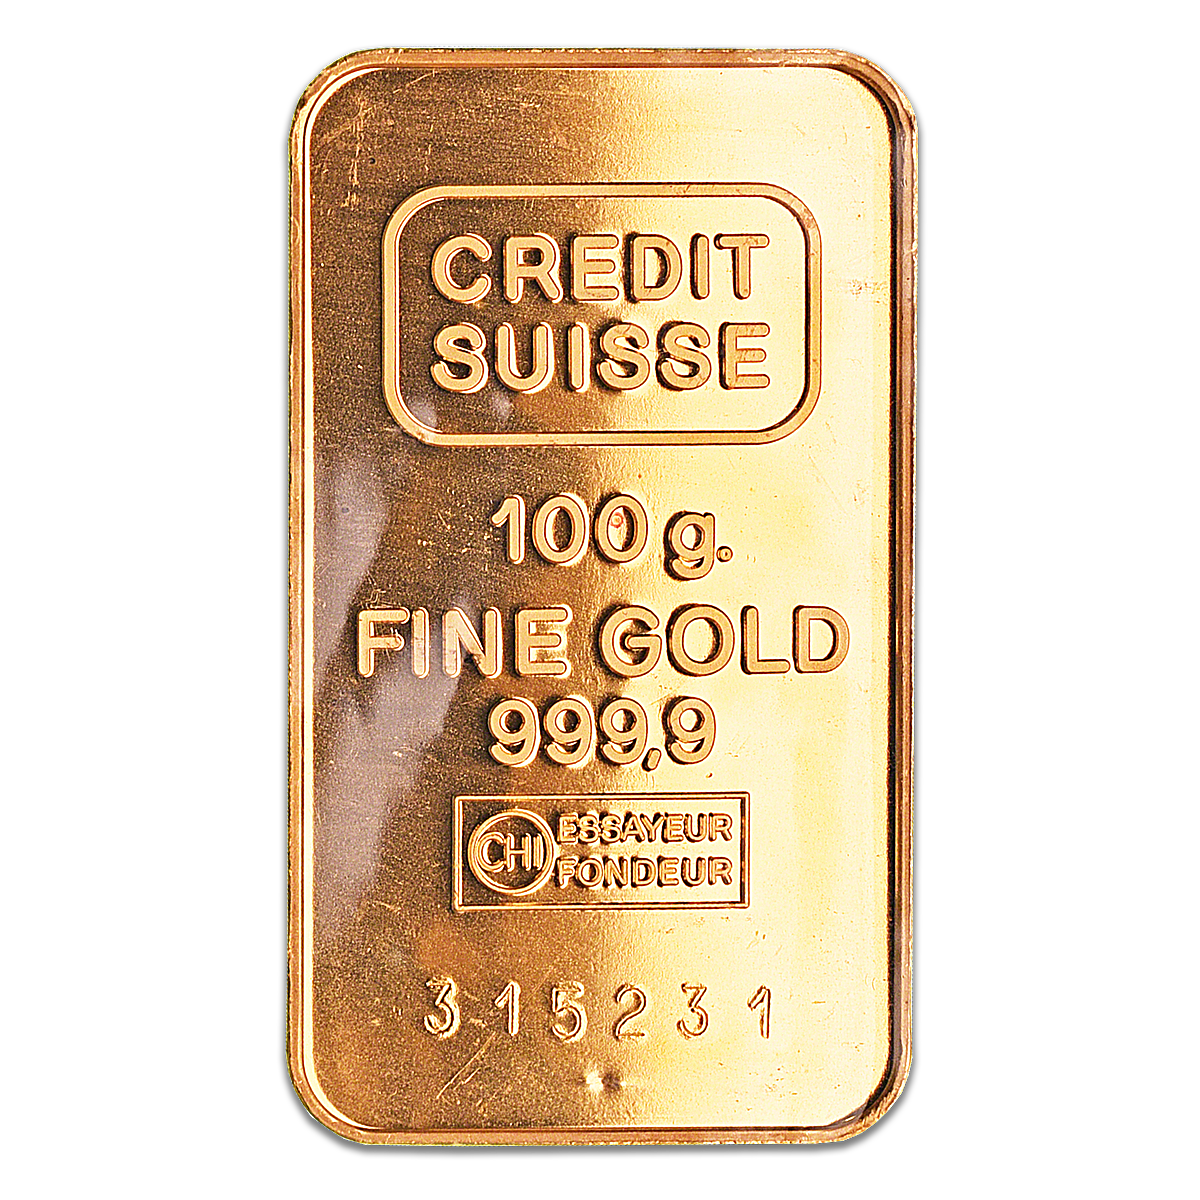 Suisse gold bar